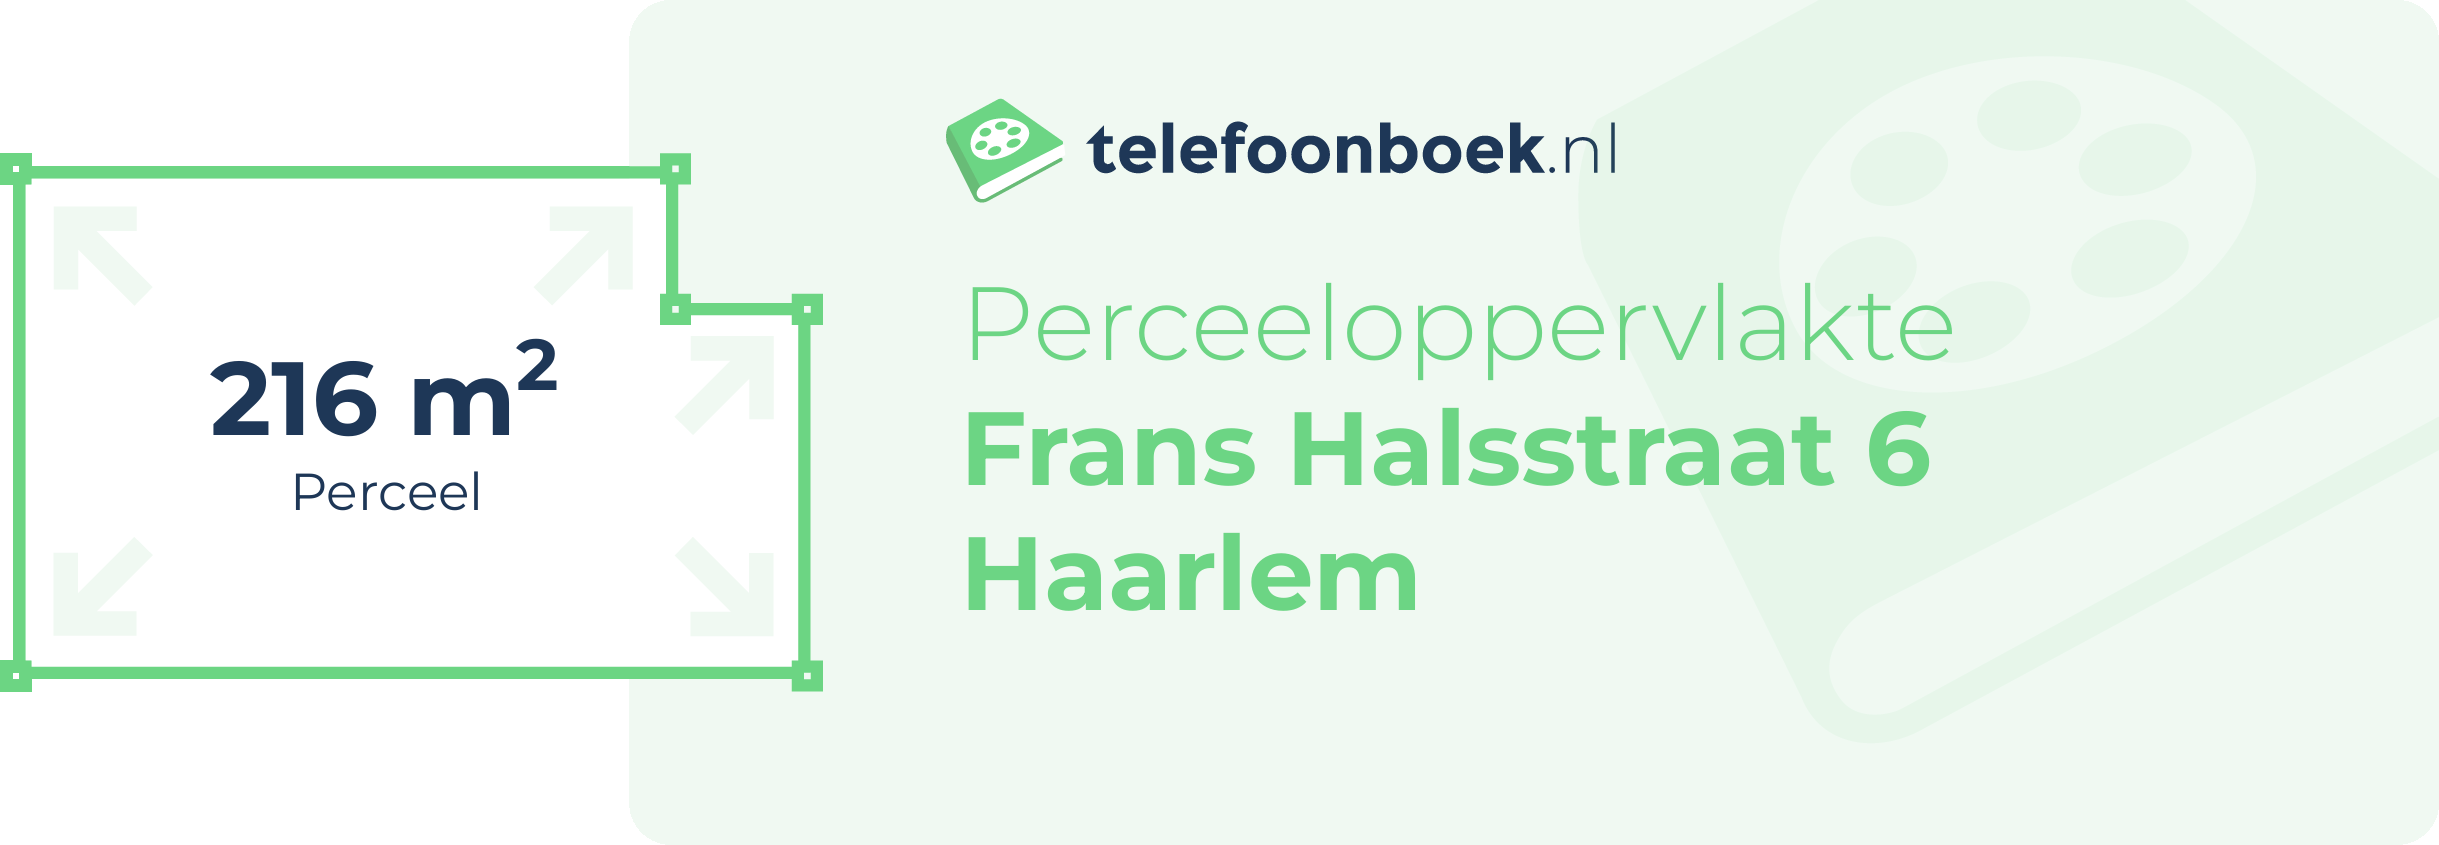 Perceeloppervlakte Frans Halsstraat 6 Haarlem